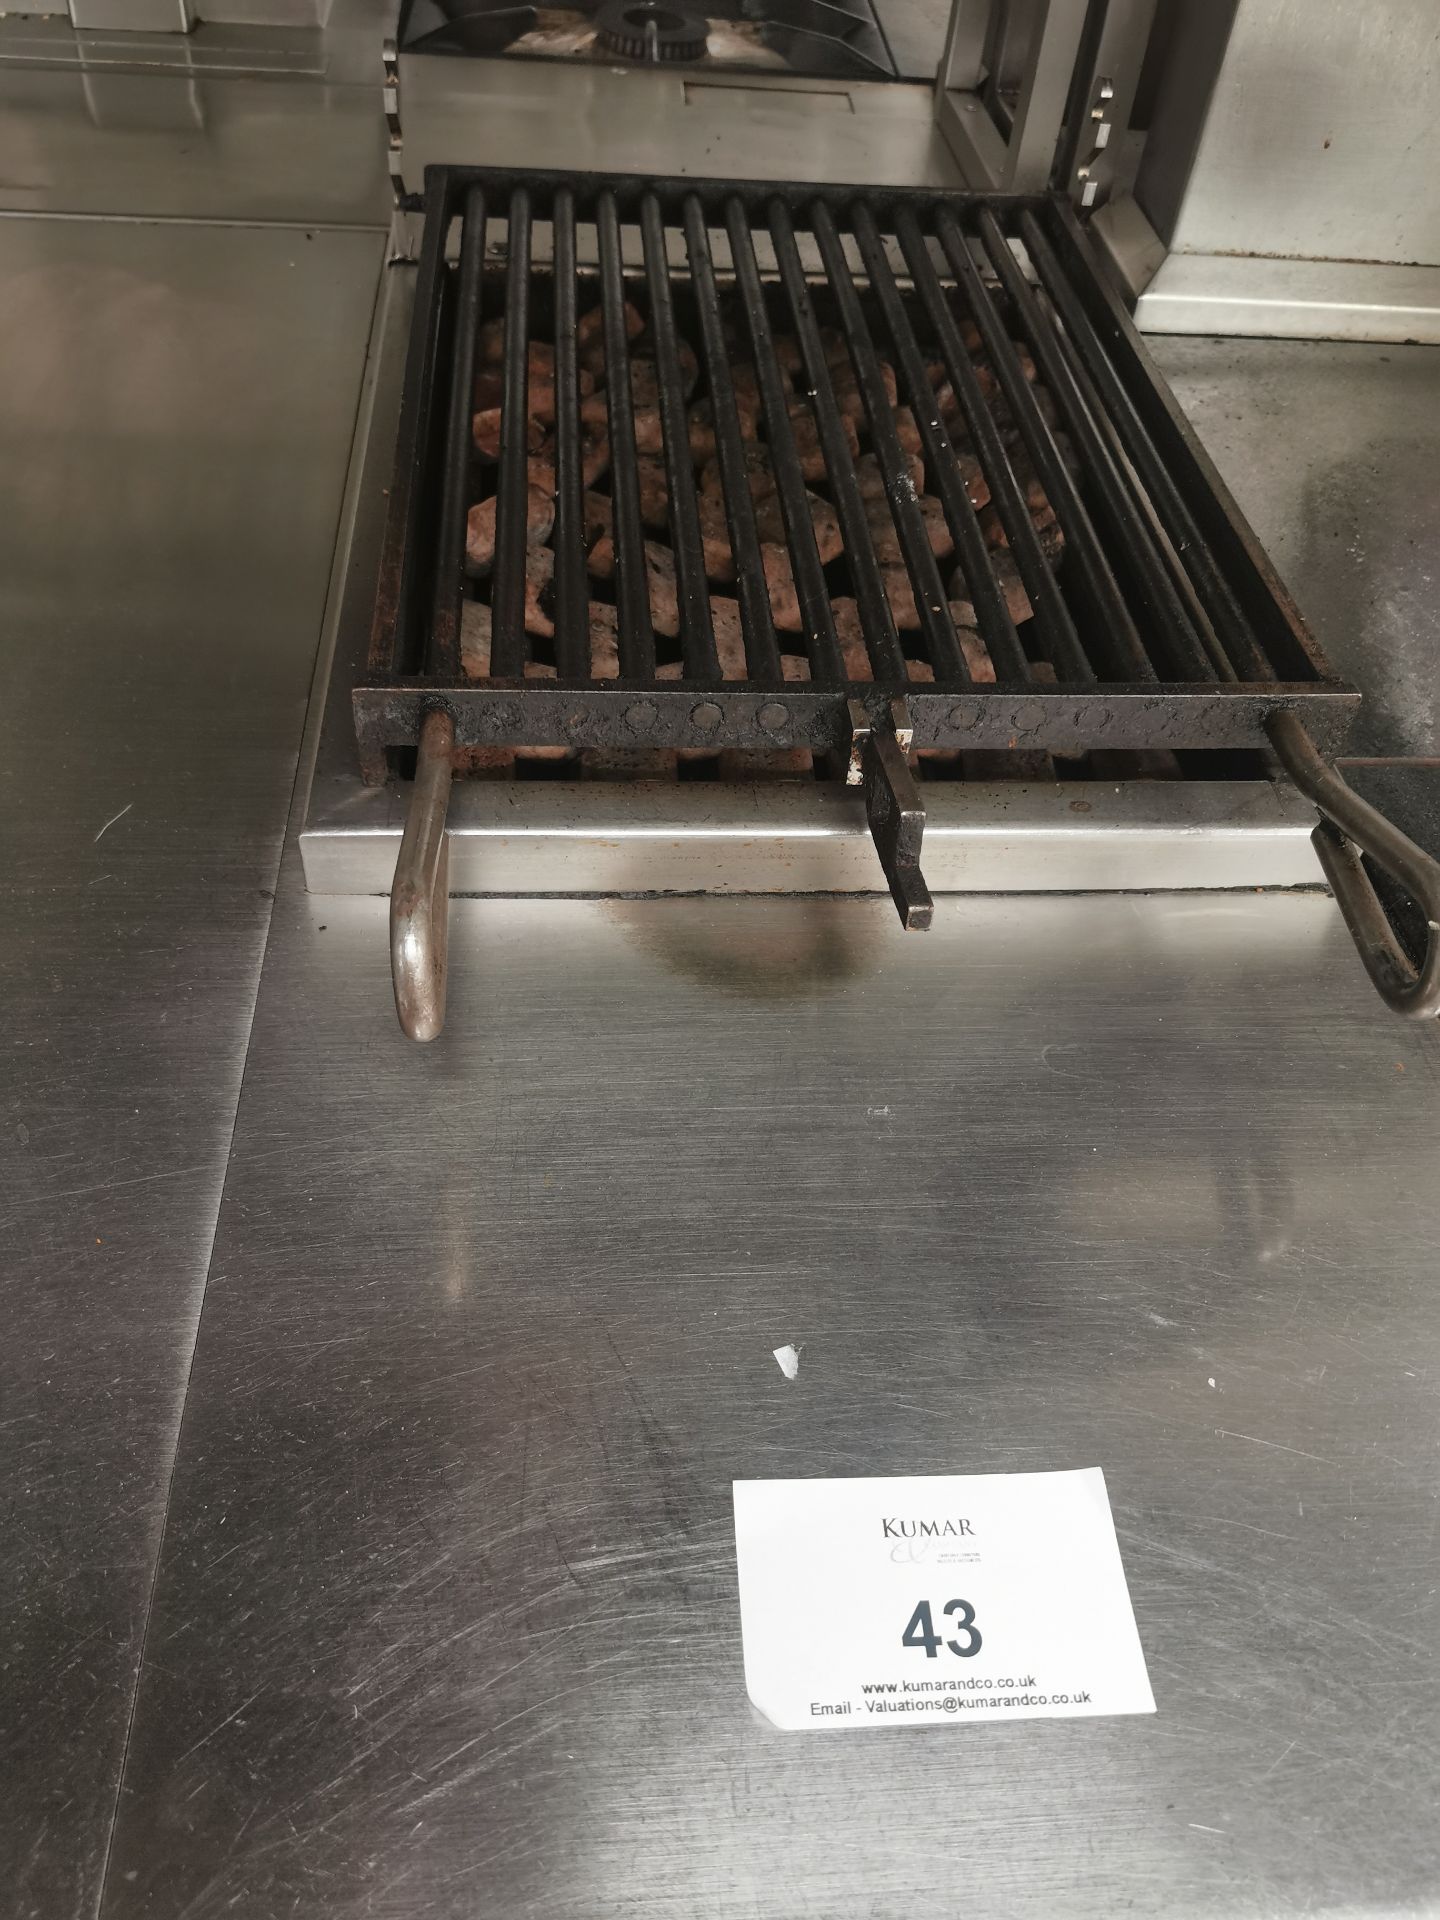 Charvet pro series charcoal grill width 42.5cm dep - Image 4 of 4